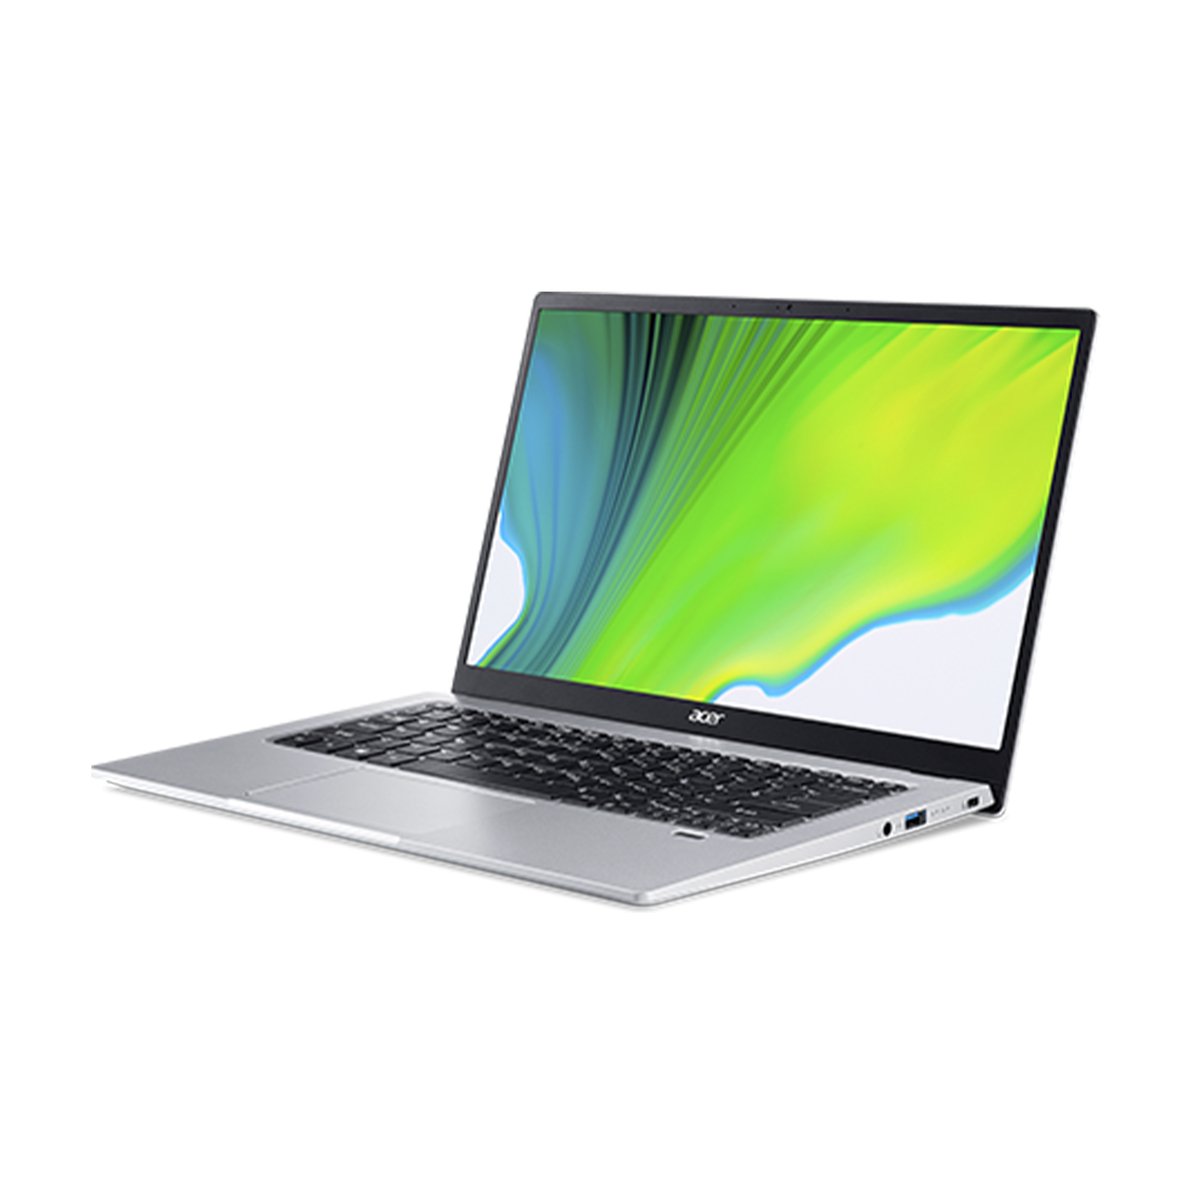 Acer Swift 1 SP114-31-C857,Intel Celeron,4GB RAM,64GB EMMC,Integrated VGA,14.0" FHD,Windows 10,Arabic English Keyboard